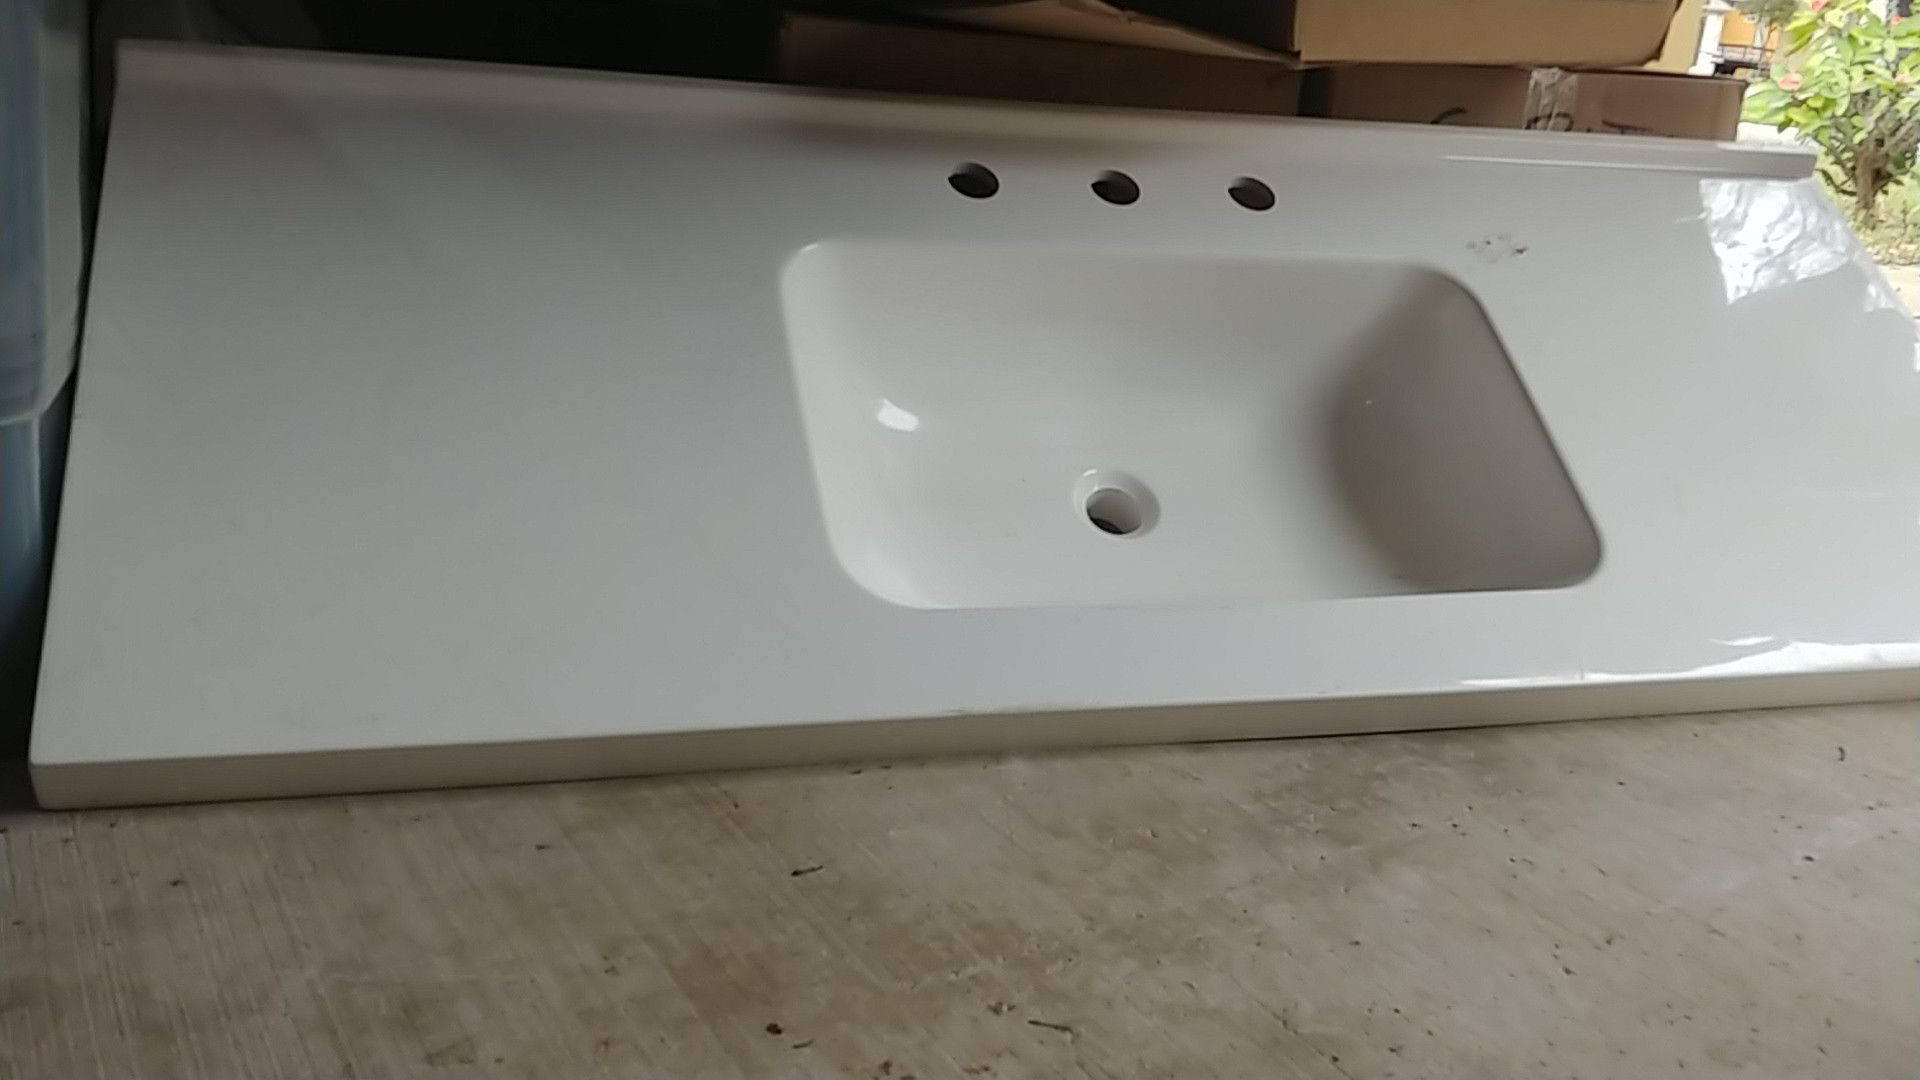 New sink